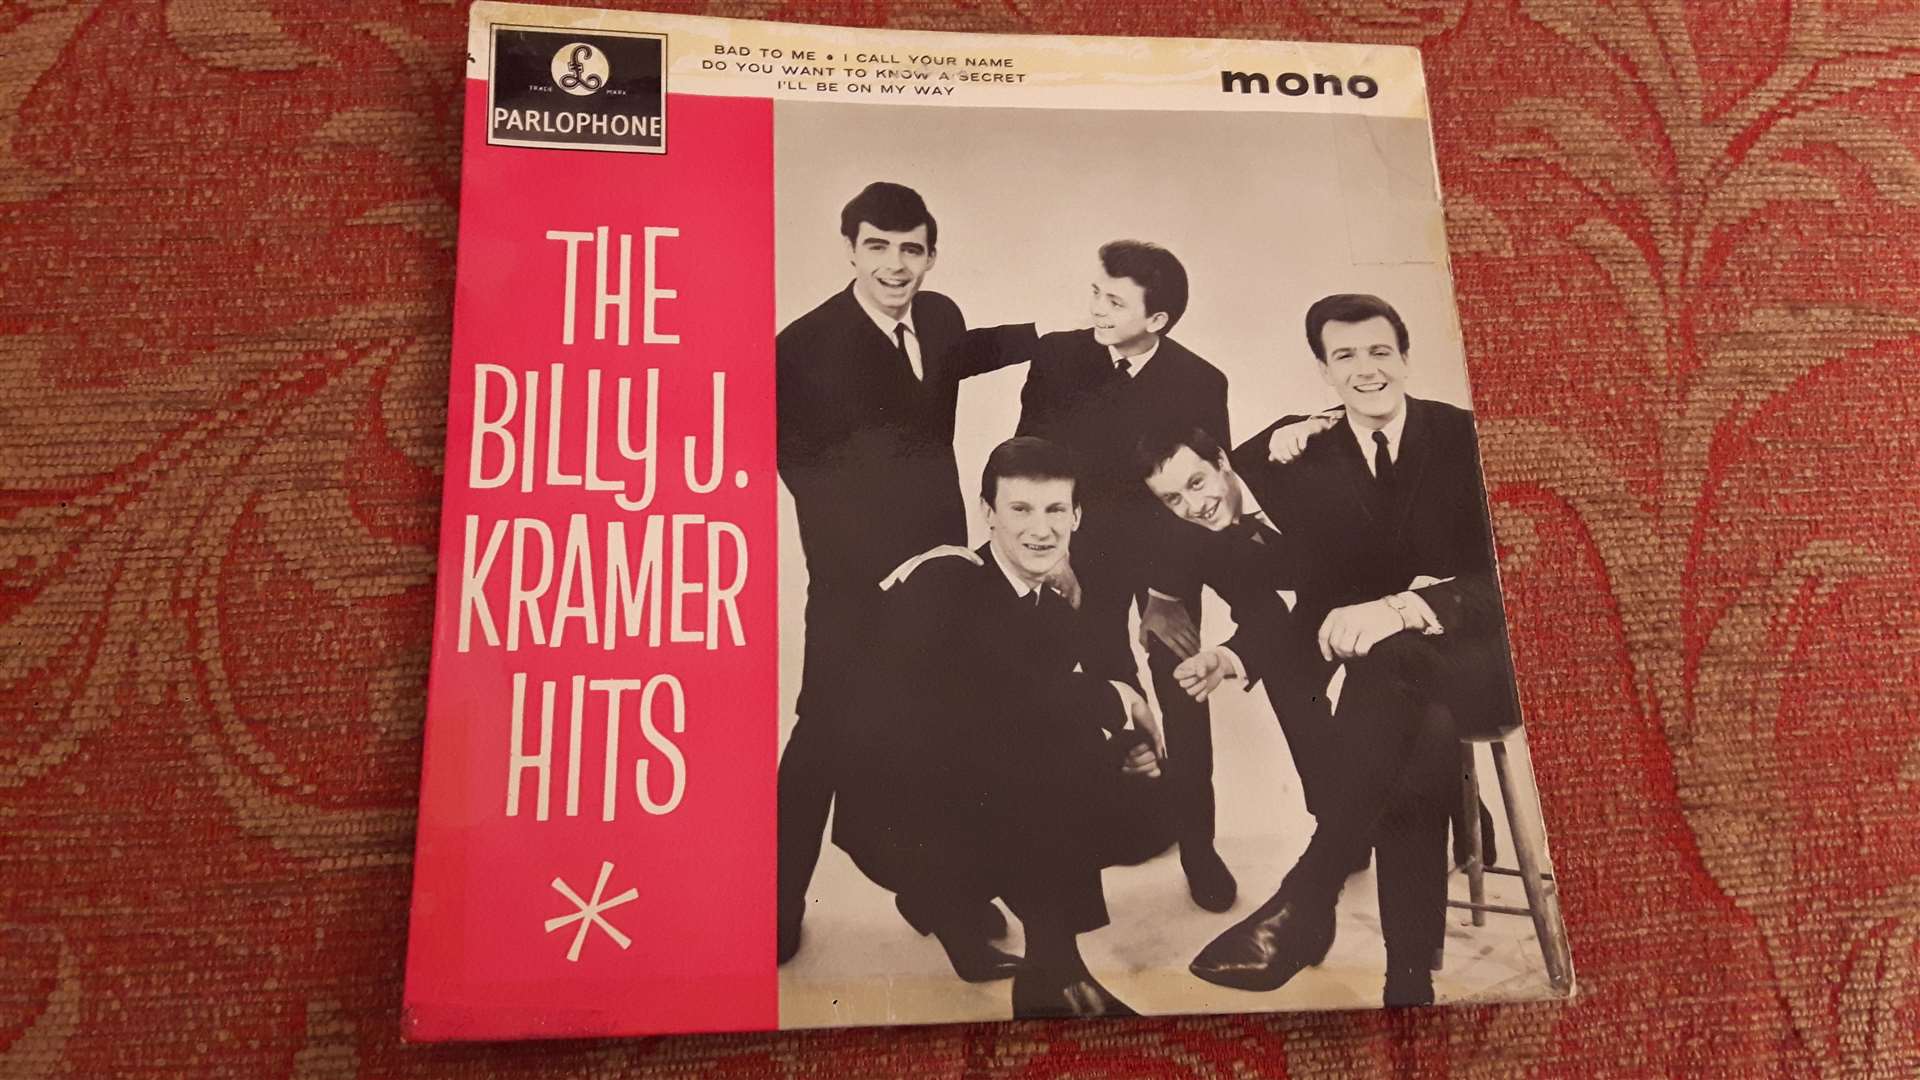 A Billy J Kramer EP from 1963